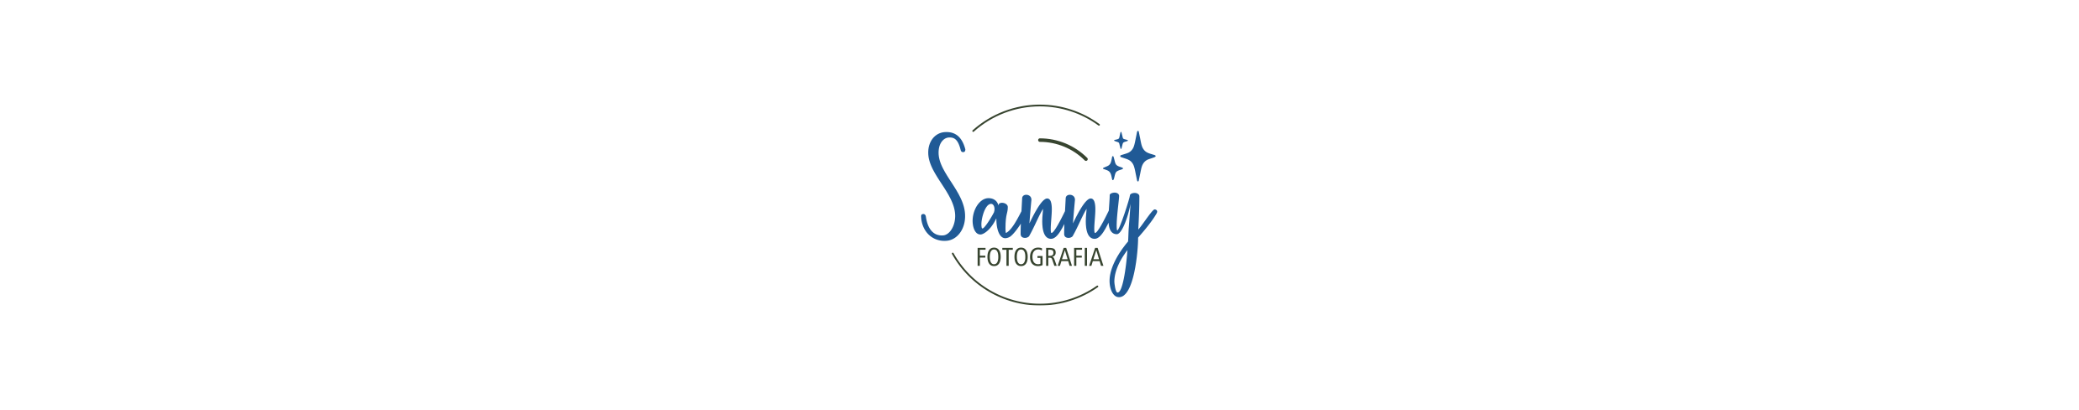 Sanny Sousa's profile banner